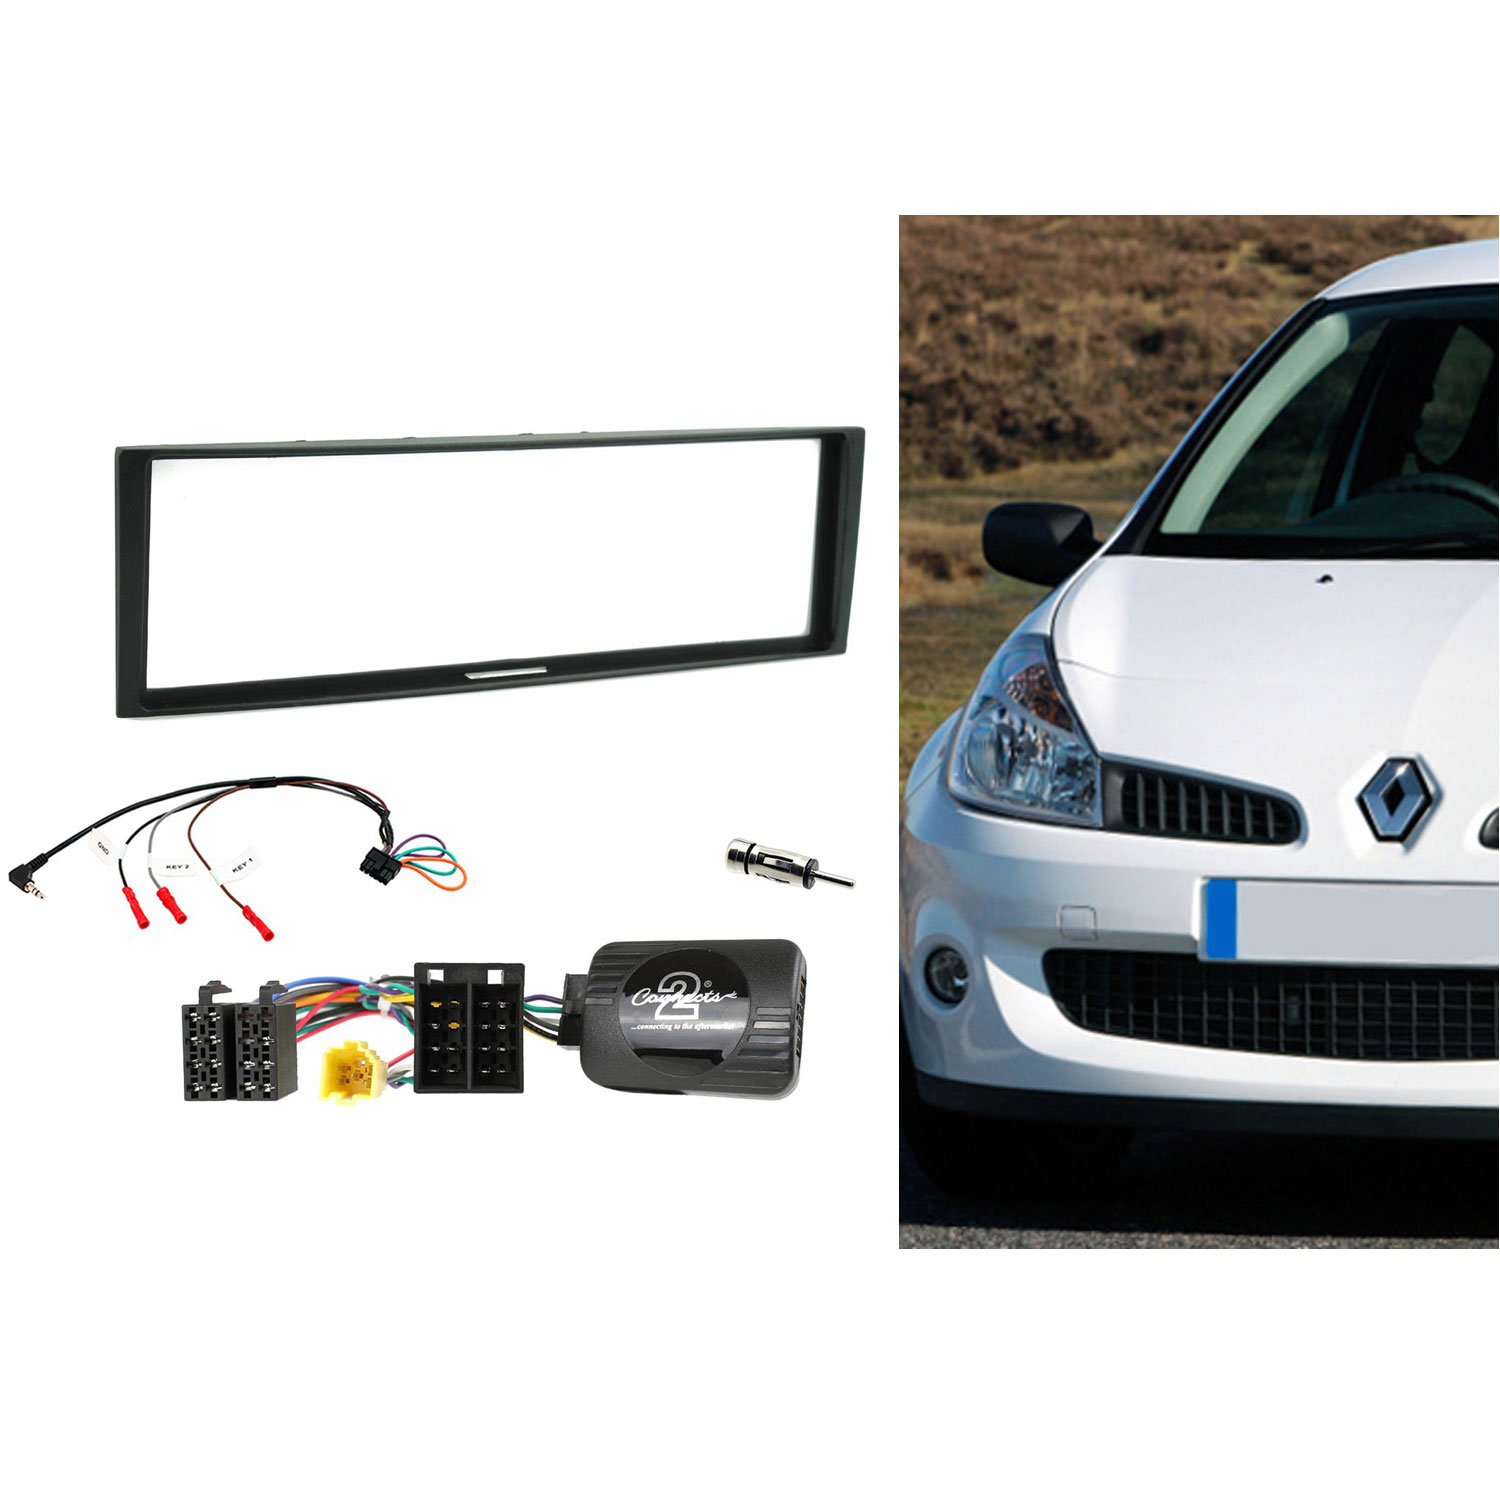 Sony Autoradio für Renault Clio 3 DAB+/Bluetooth/MP3/USB